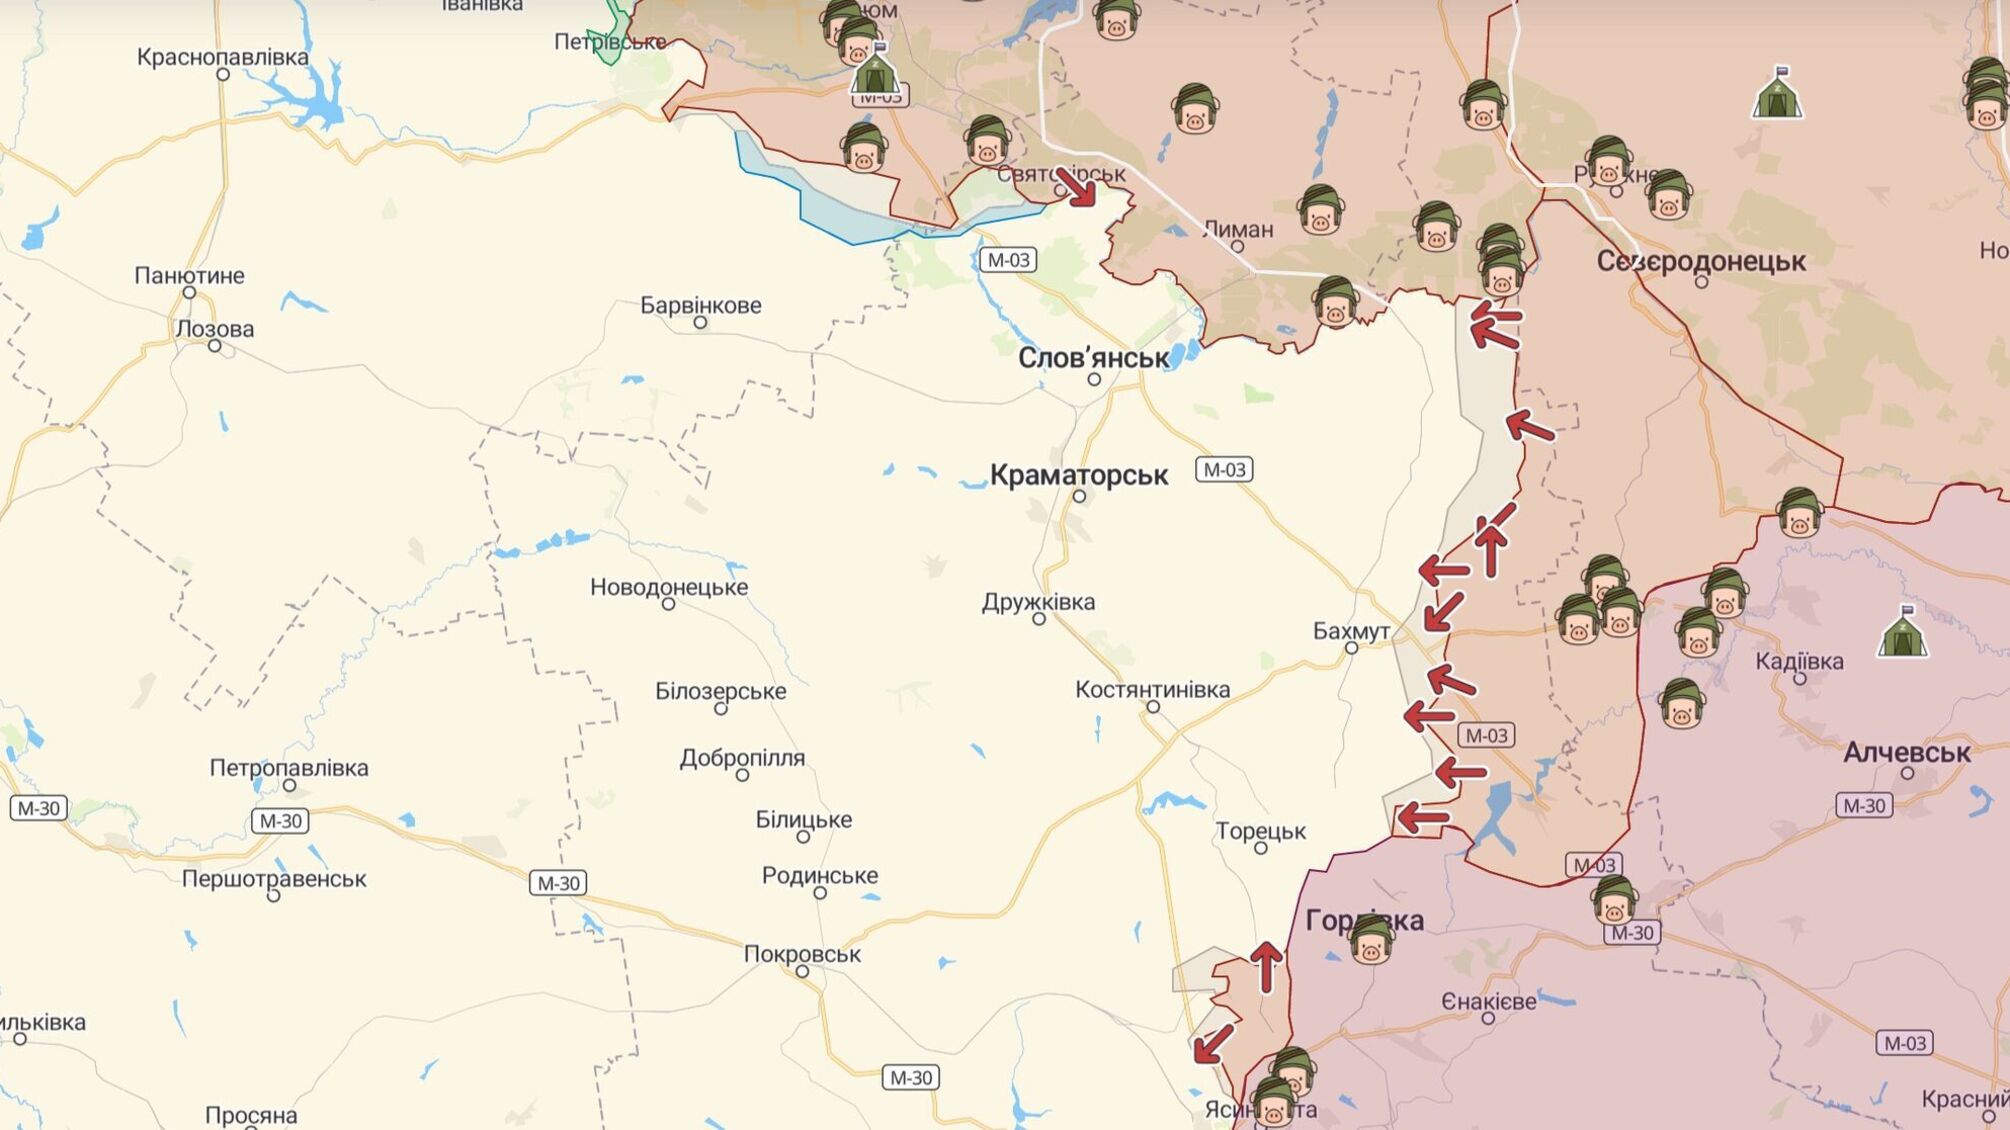 Оперативная ситуация на востоке Украины на 12 августа 2022 года